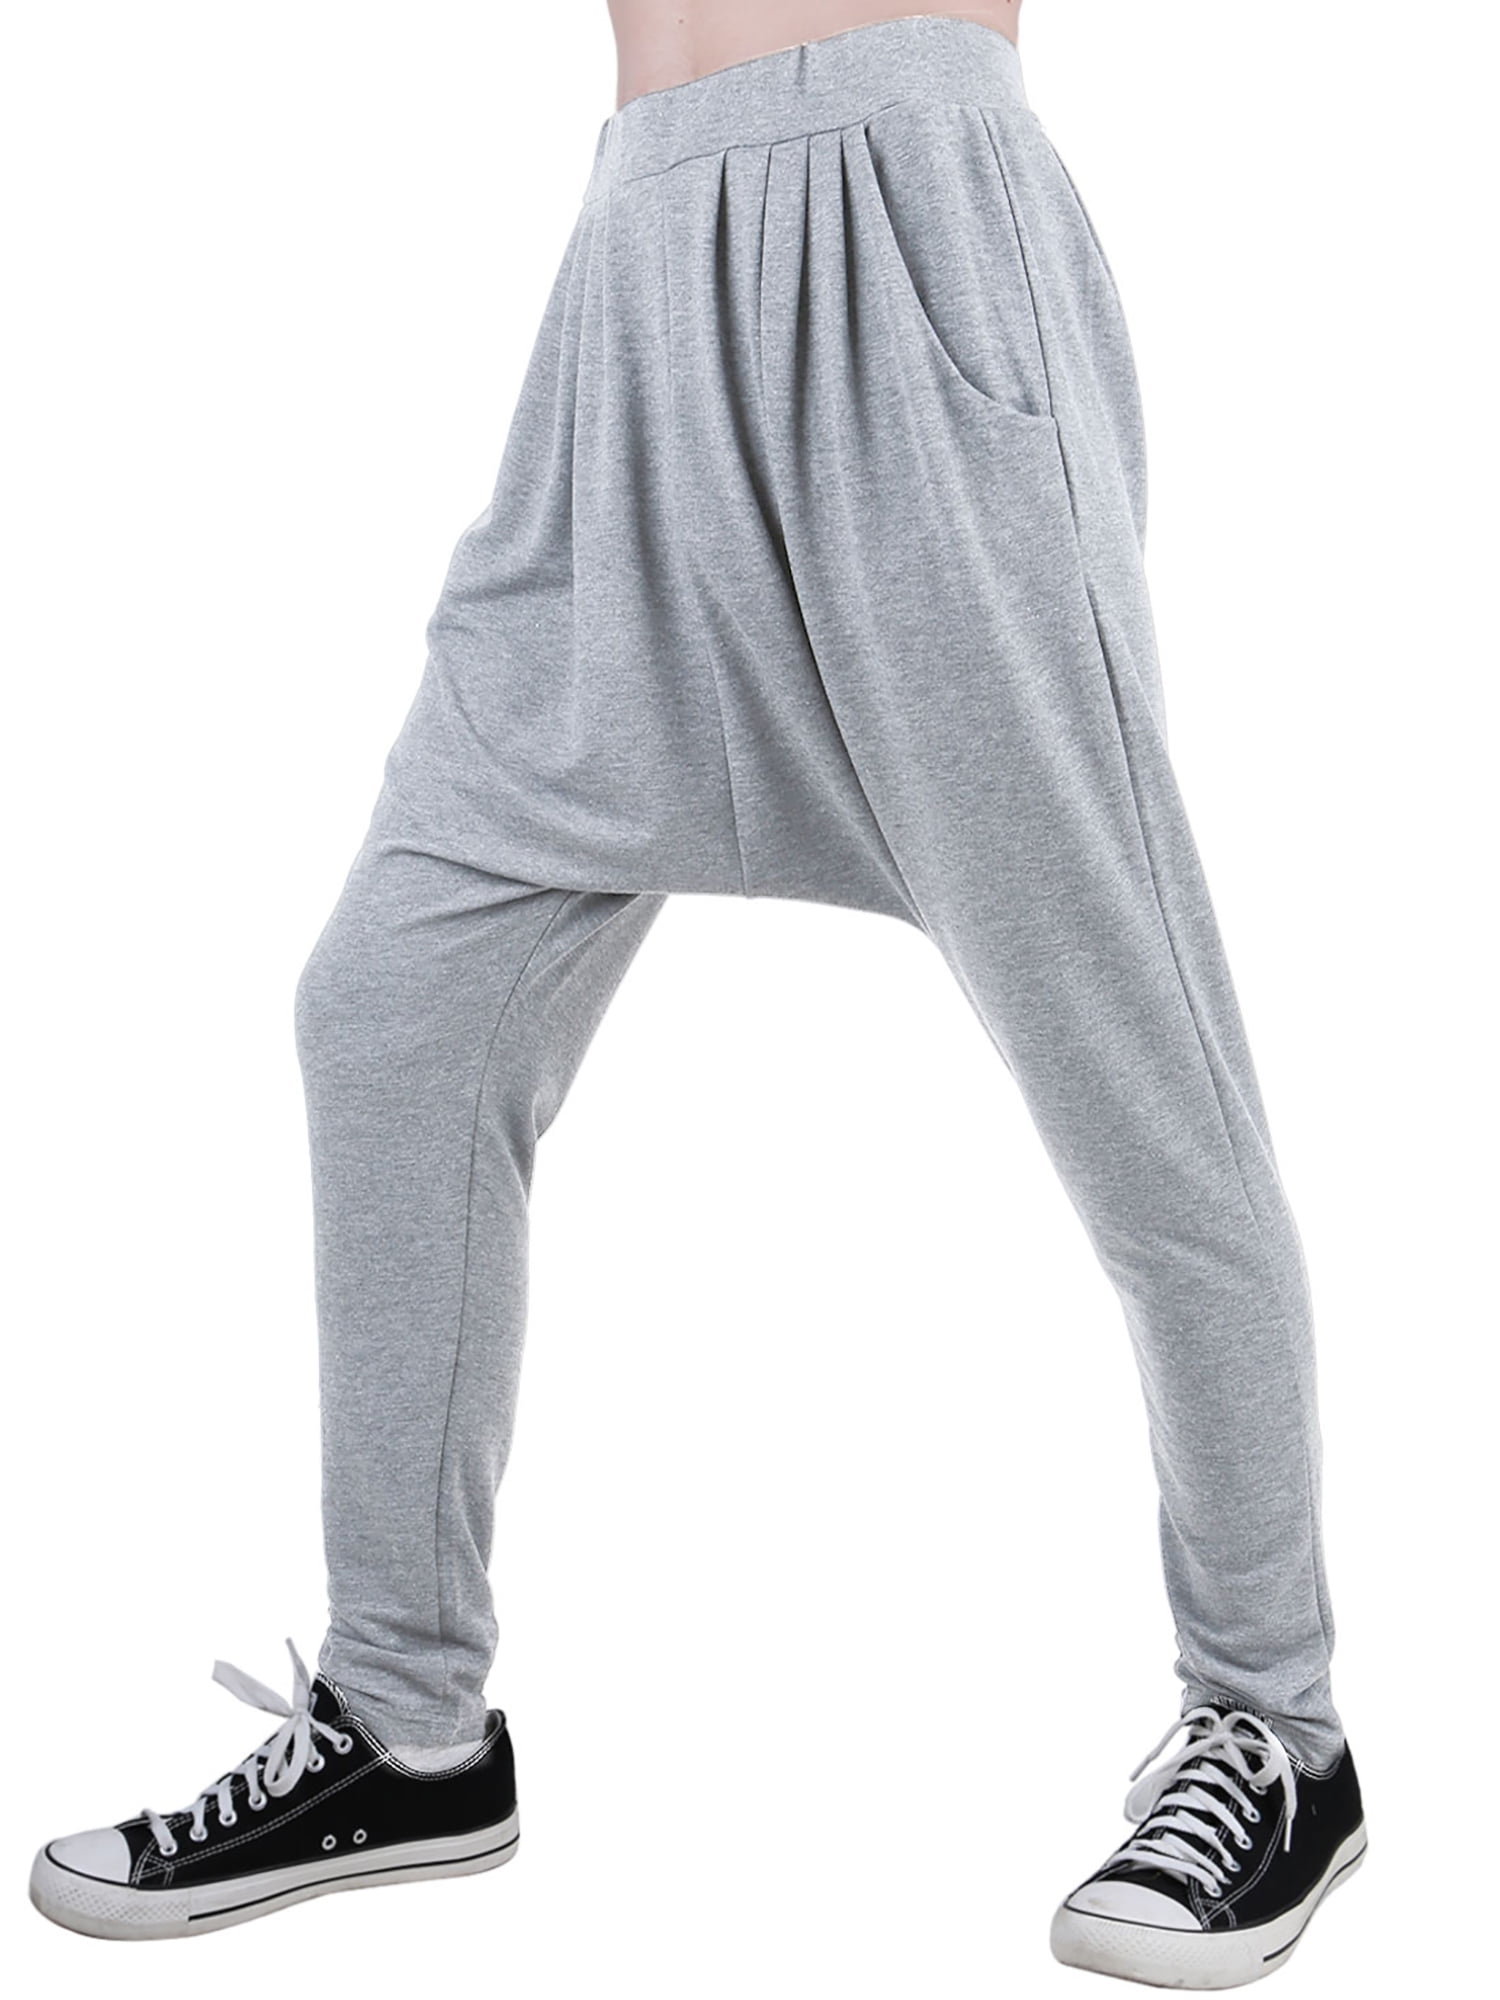 Mens Fashion Hip Hop Casual Trousers Baggy Harem Pants Light Gray W28 ...